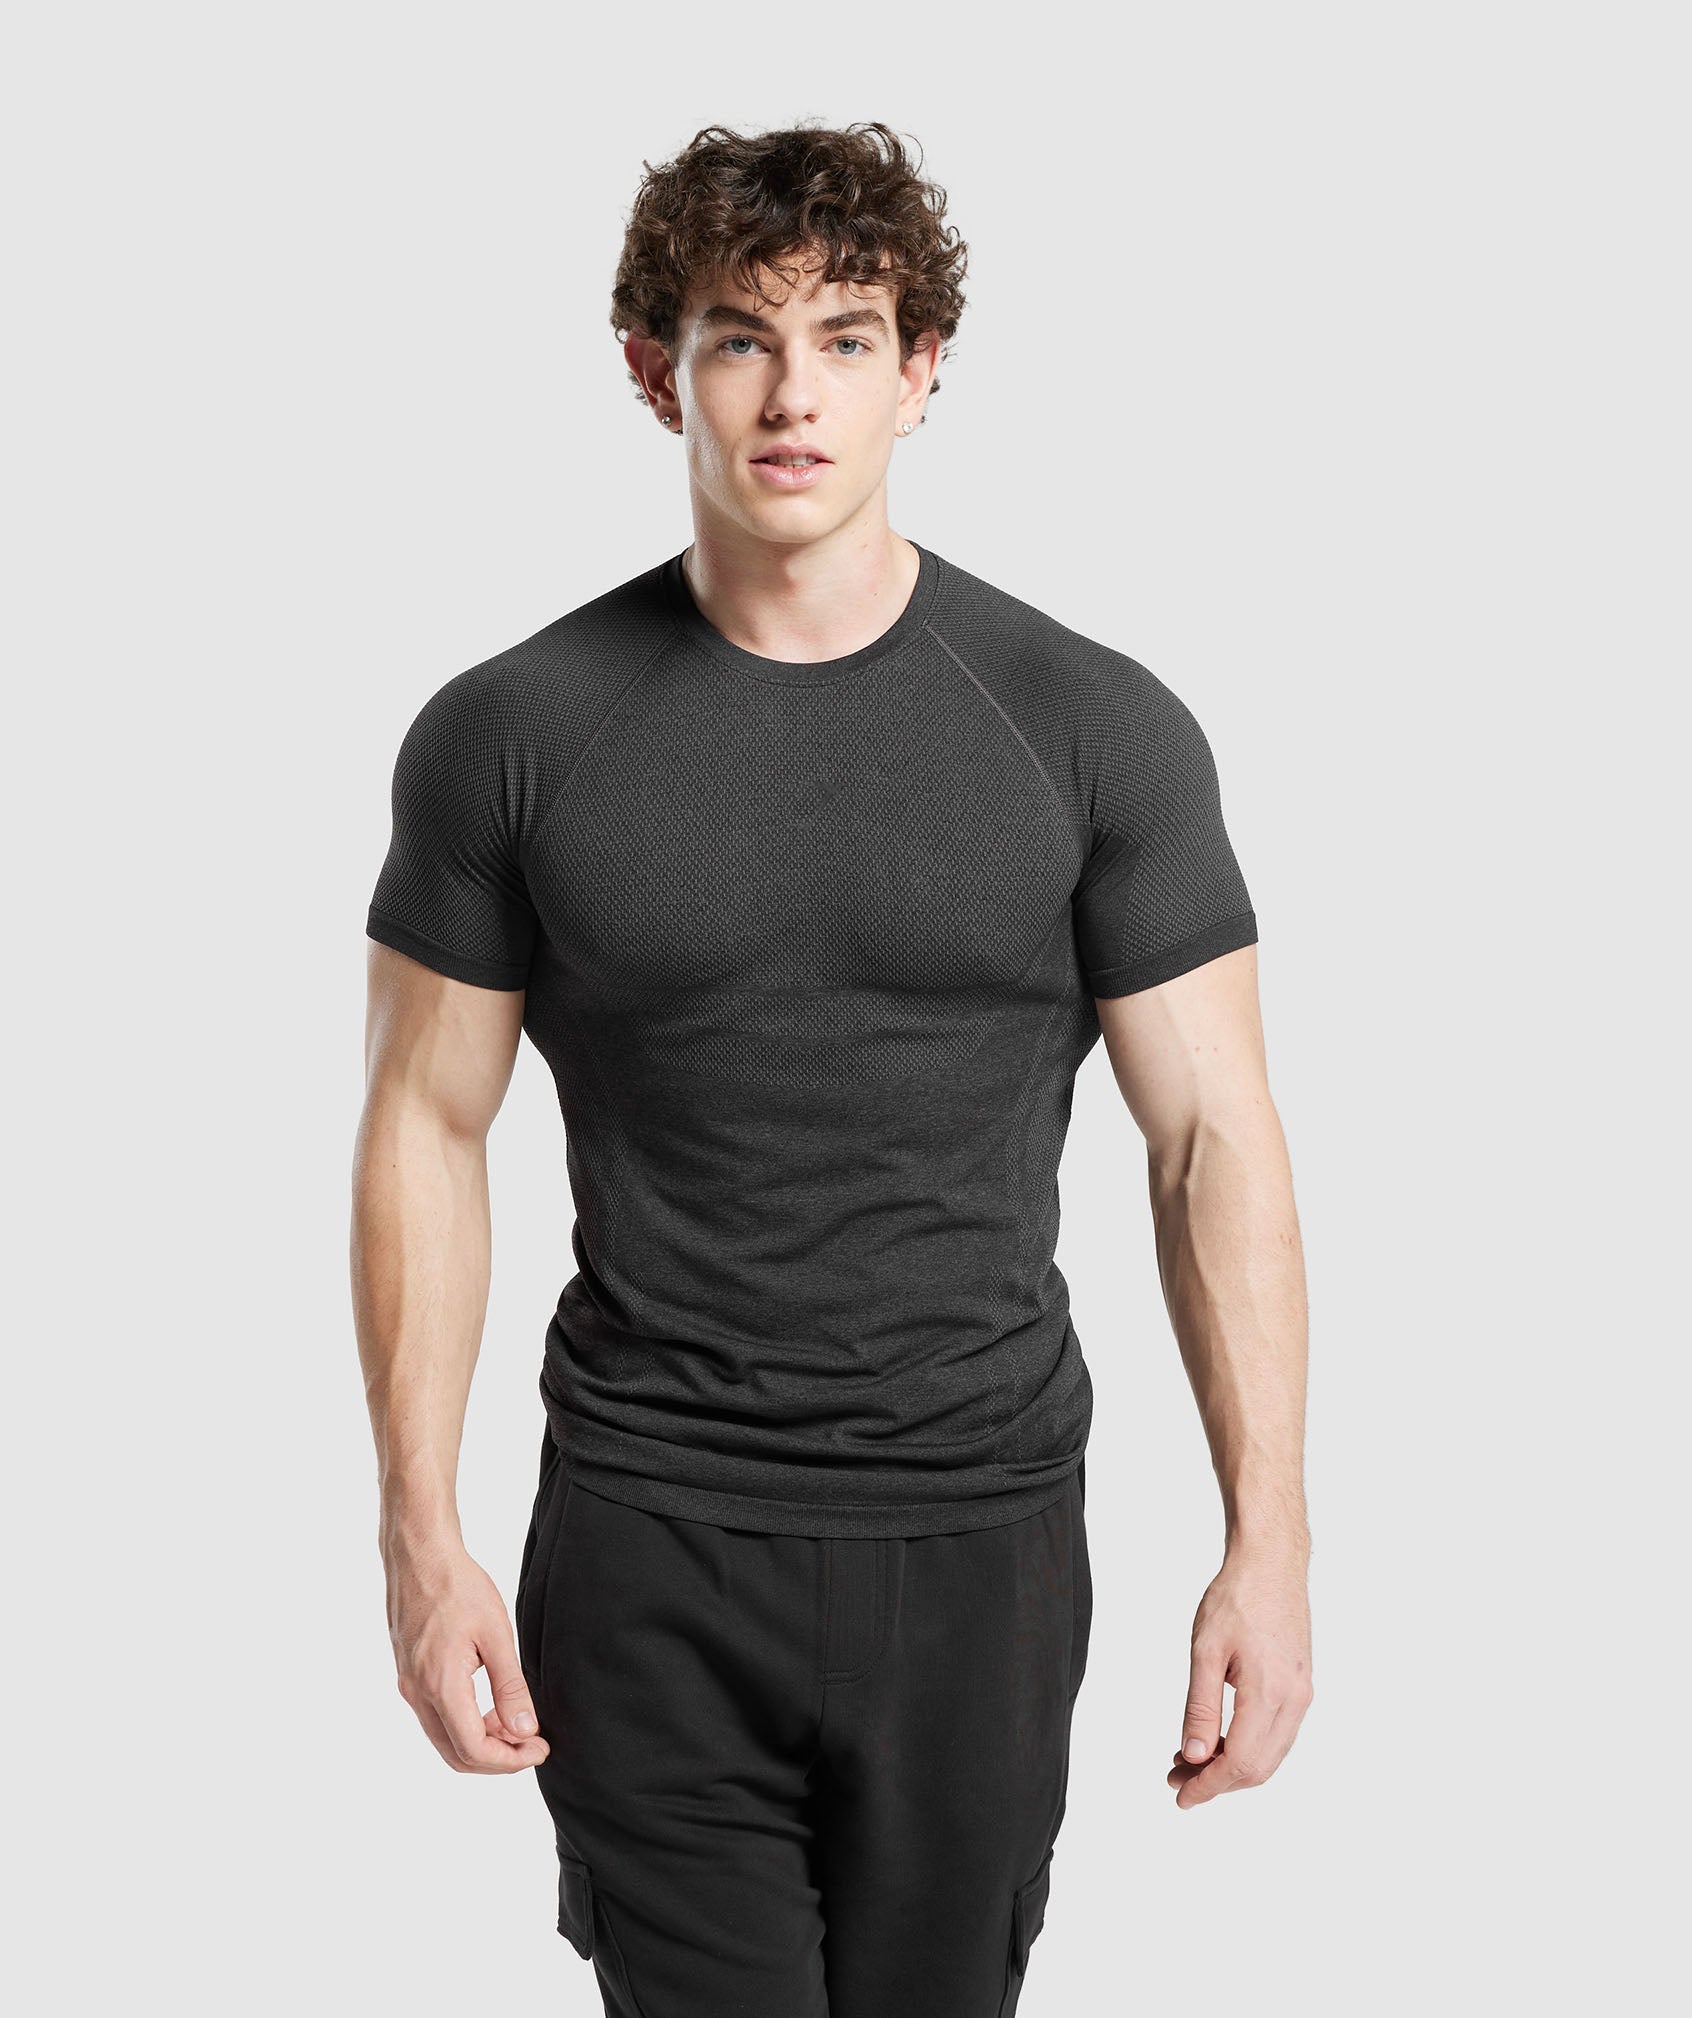 Elite Seamless T-Shirt in Black/Dark Grey - view 1